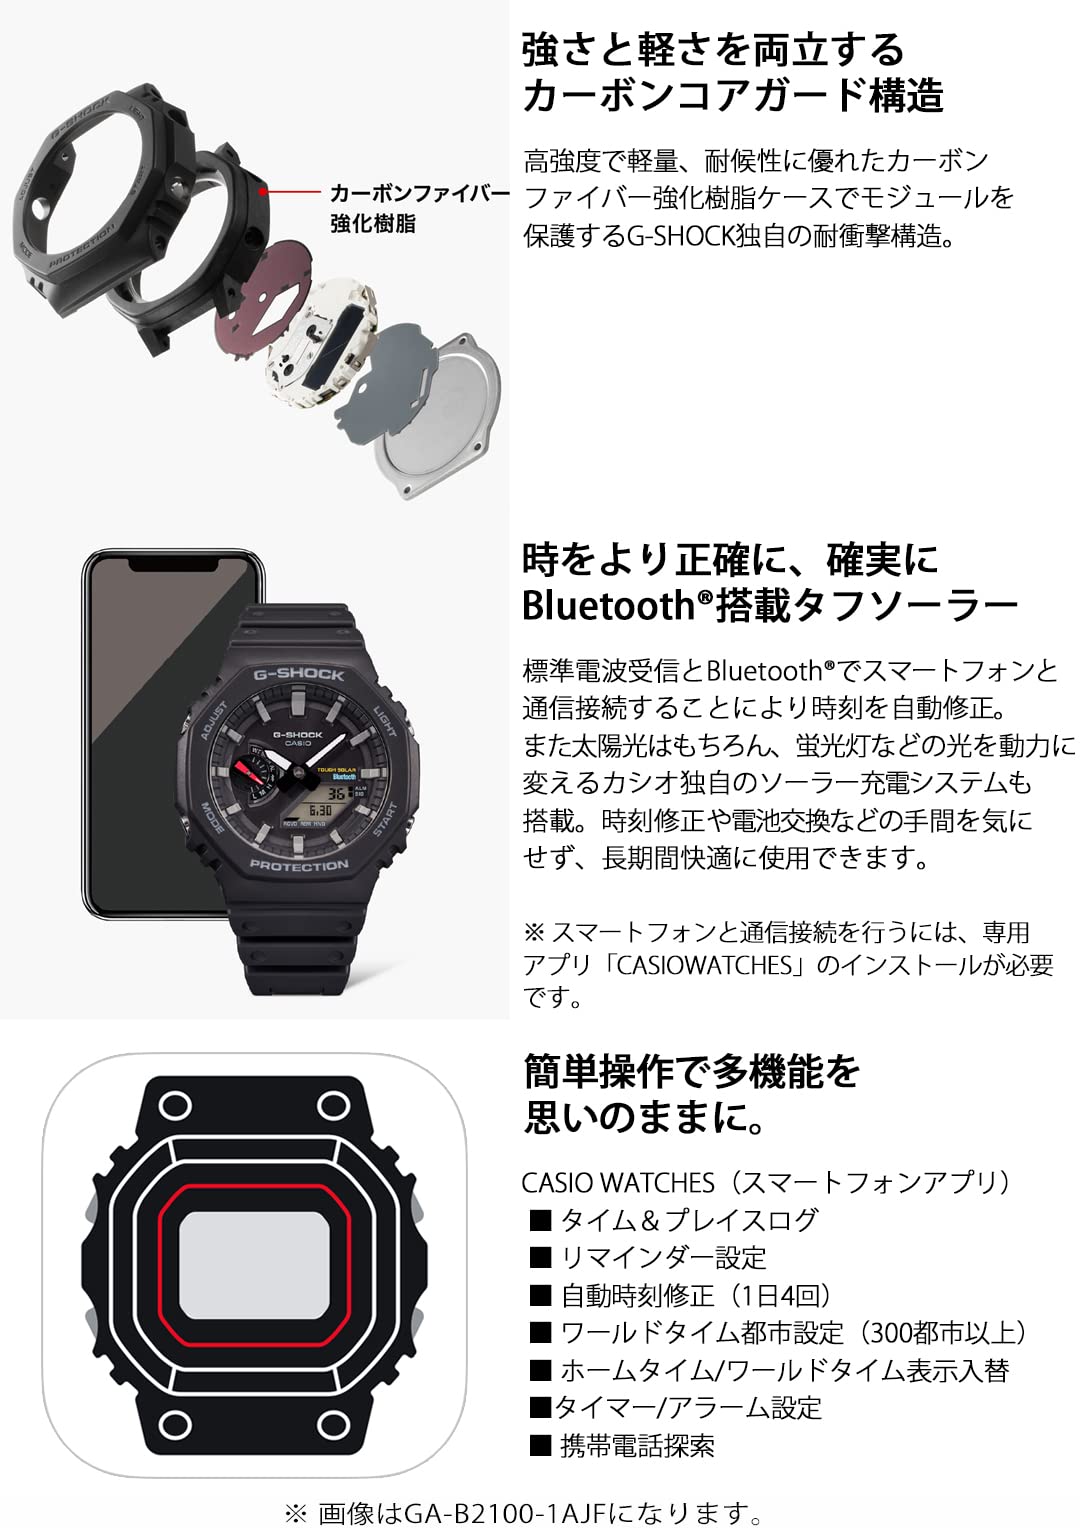 Casio GA-B2100-1AJF [G-Shock GA-B2100 Series Men's Rubber Band] Watch Shipped from Japan Released in Apr 2022